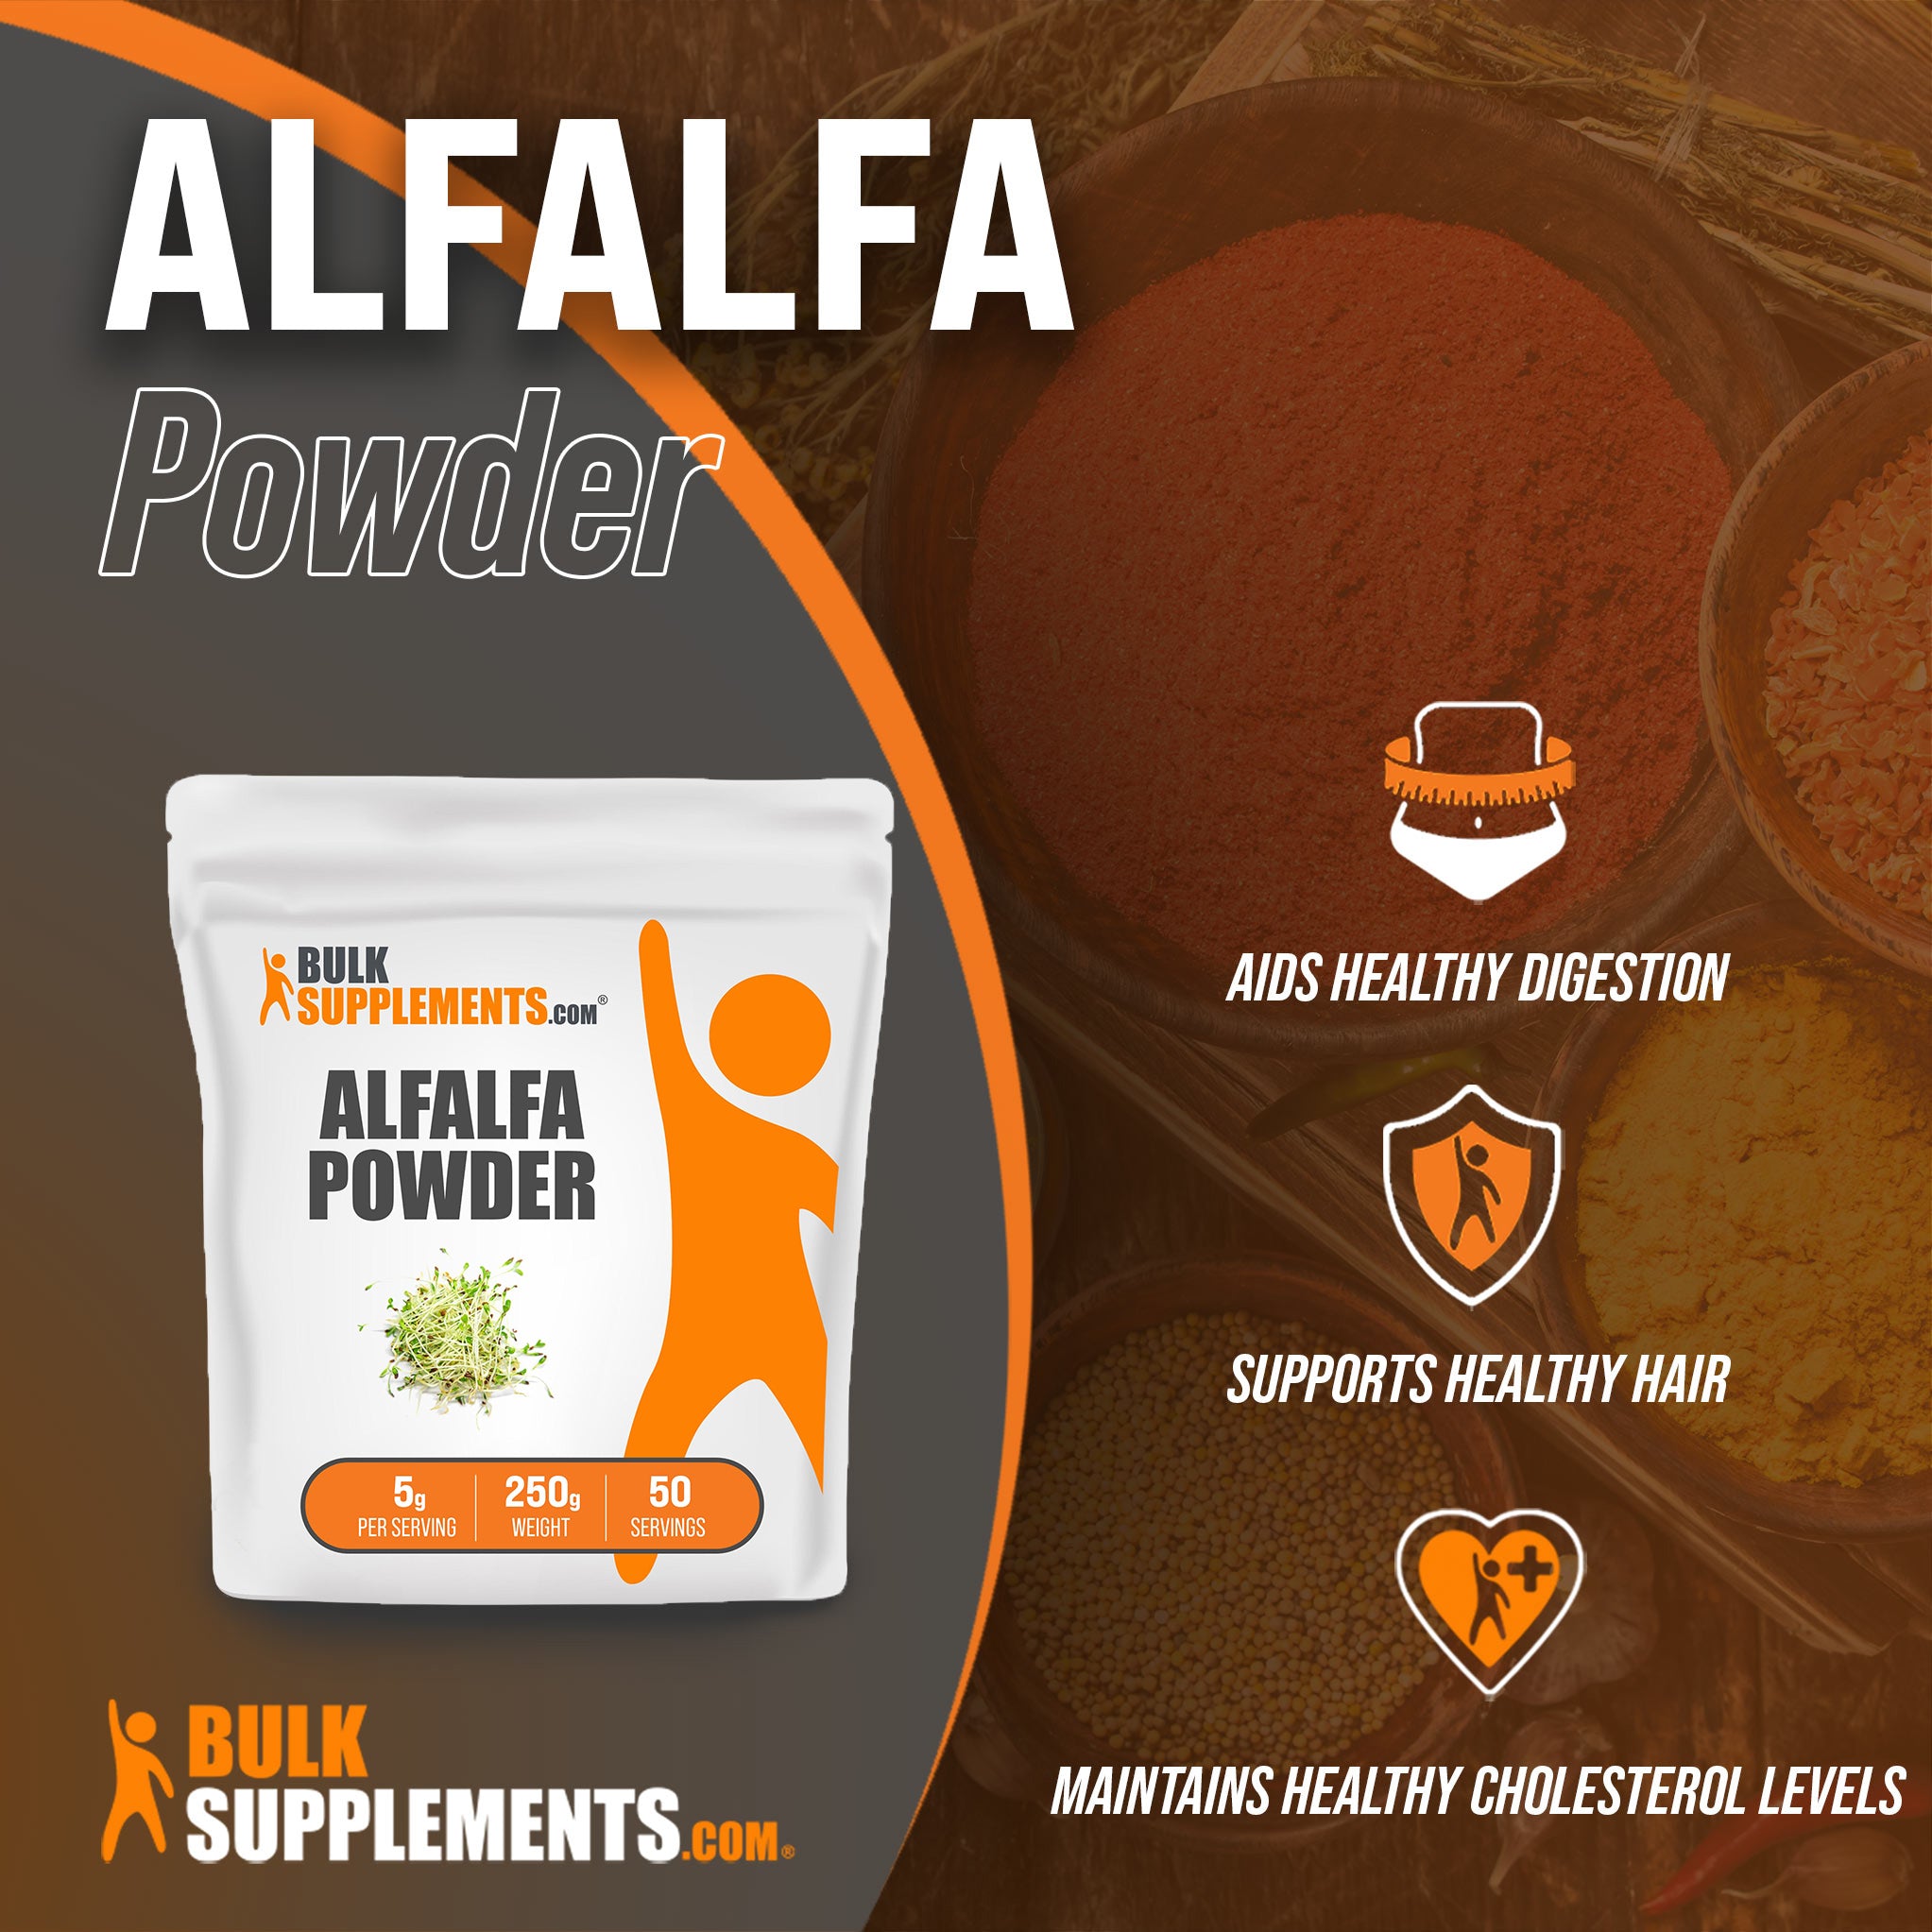 Alfalfa Powder for healthy hair and cholesterol 